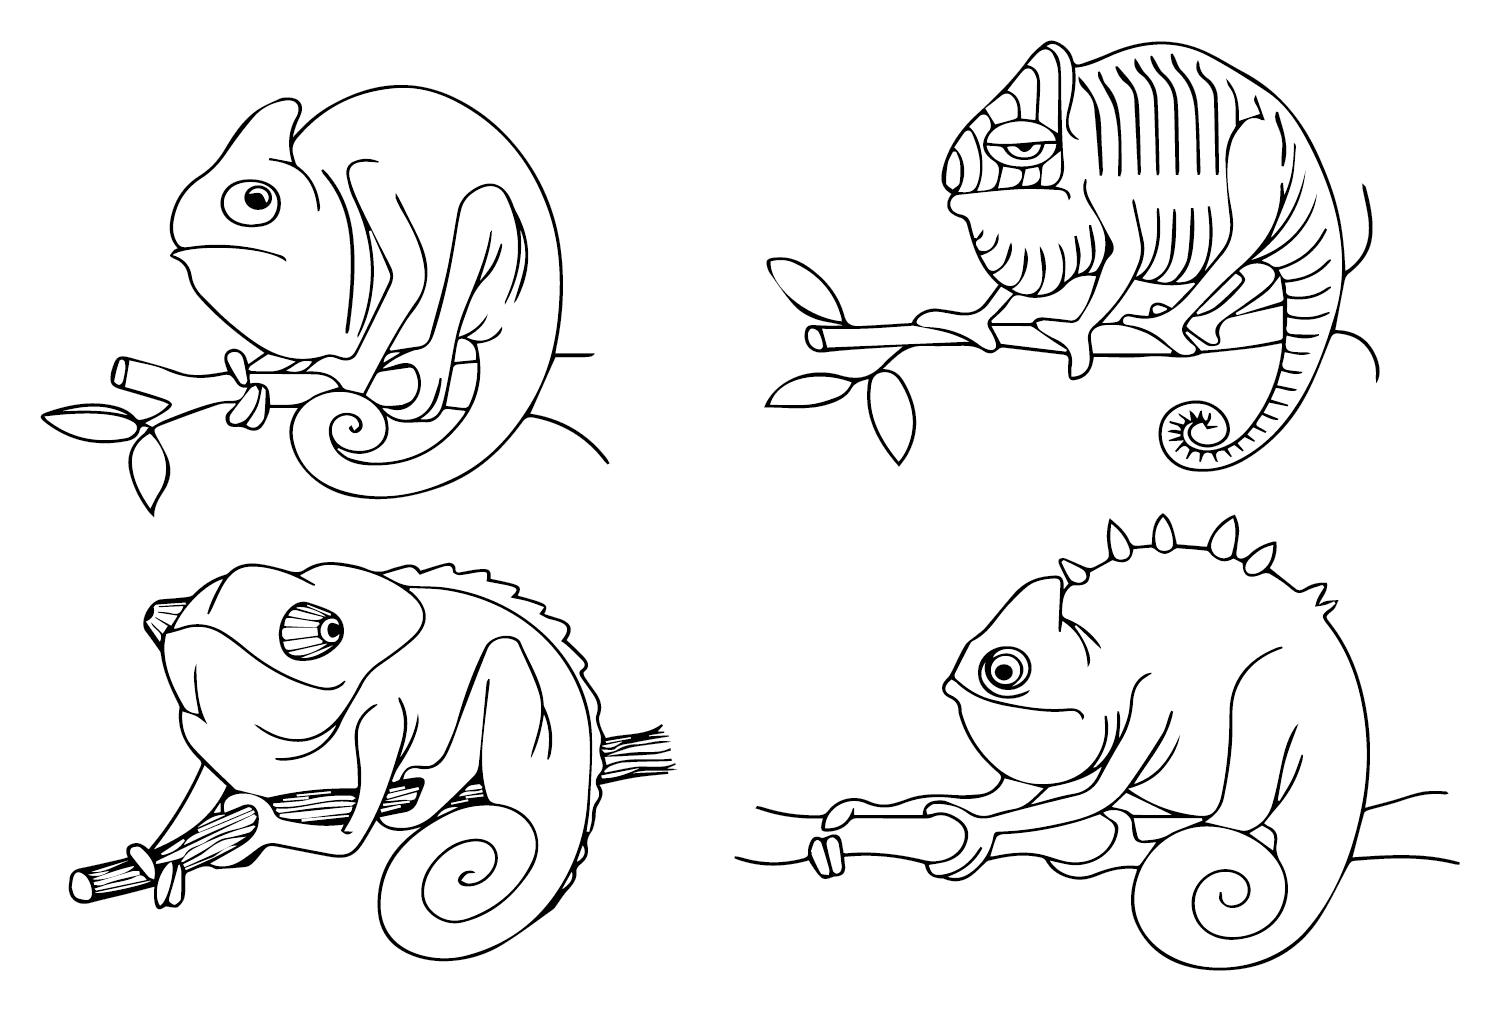 Dibujos para colorear de camaleones de Chameleon